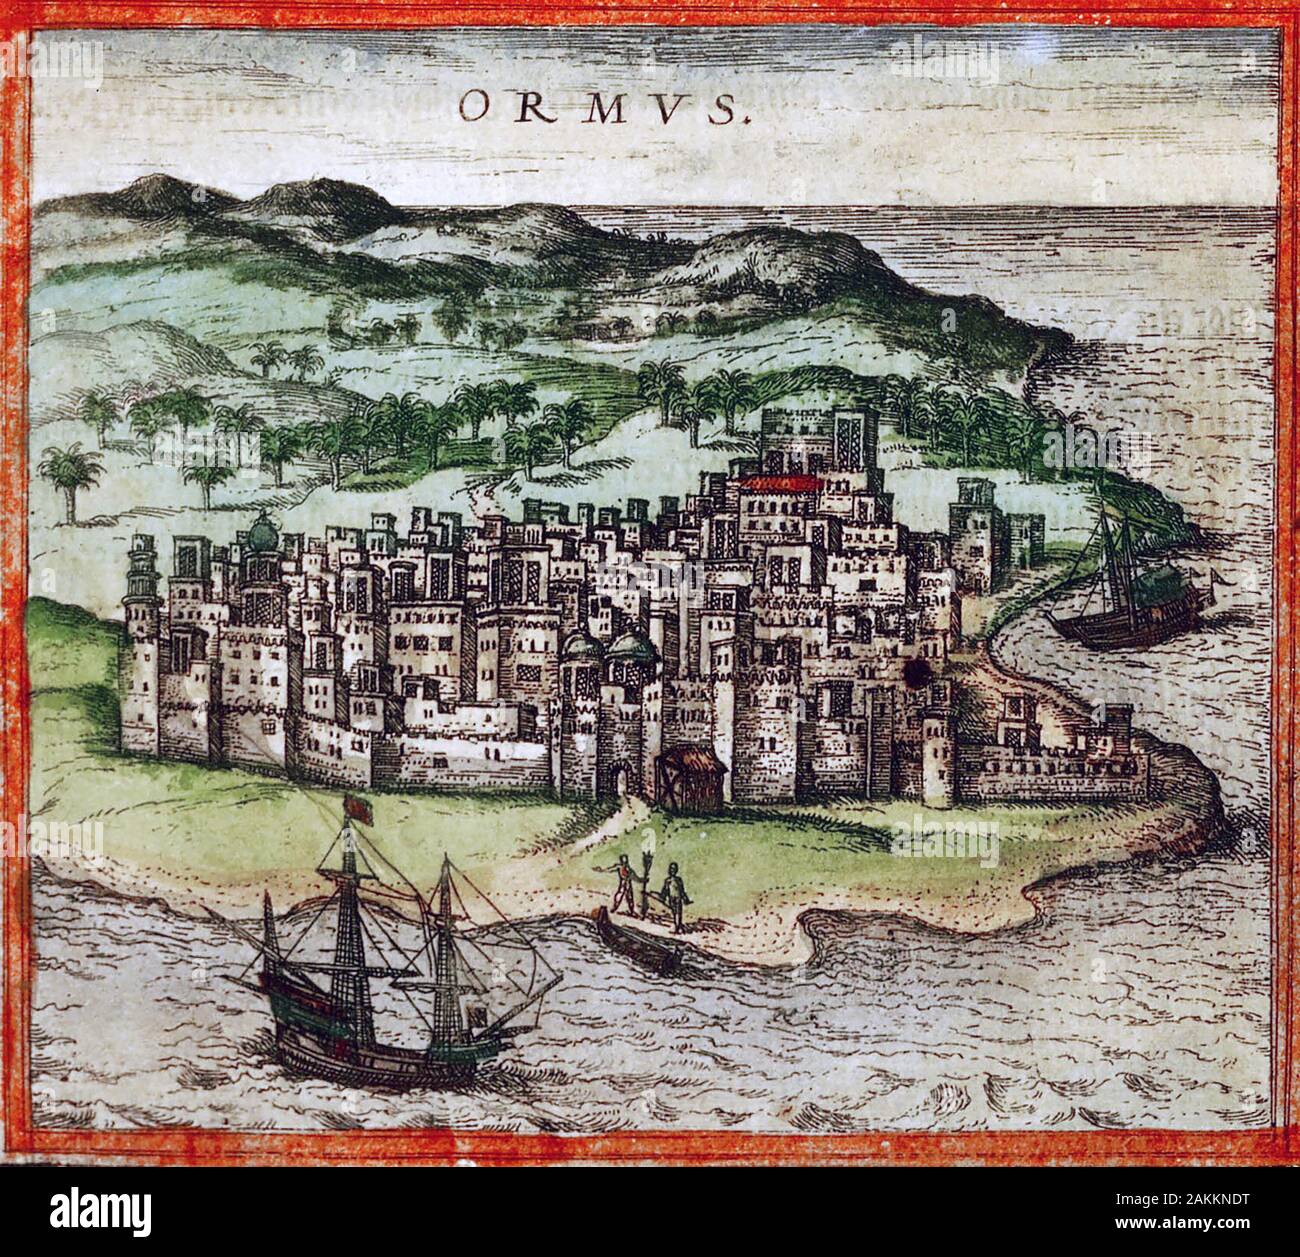 Ormuz, Irán de Braun & Hogenberg's Civitates Orbis Terrarum, publicado en 1572 Foto de stock